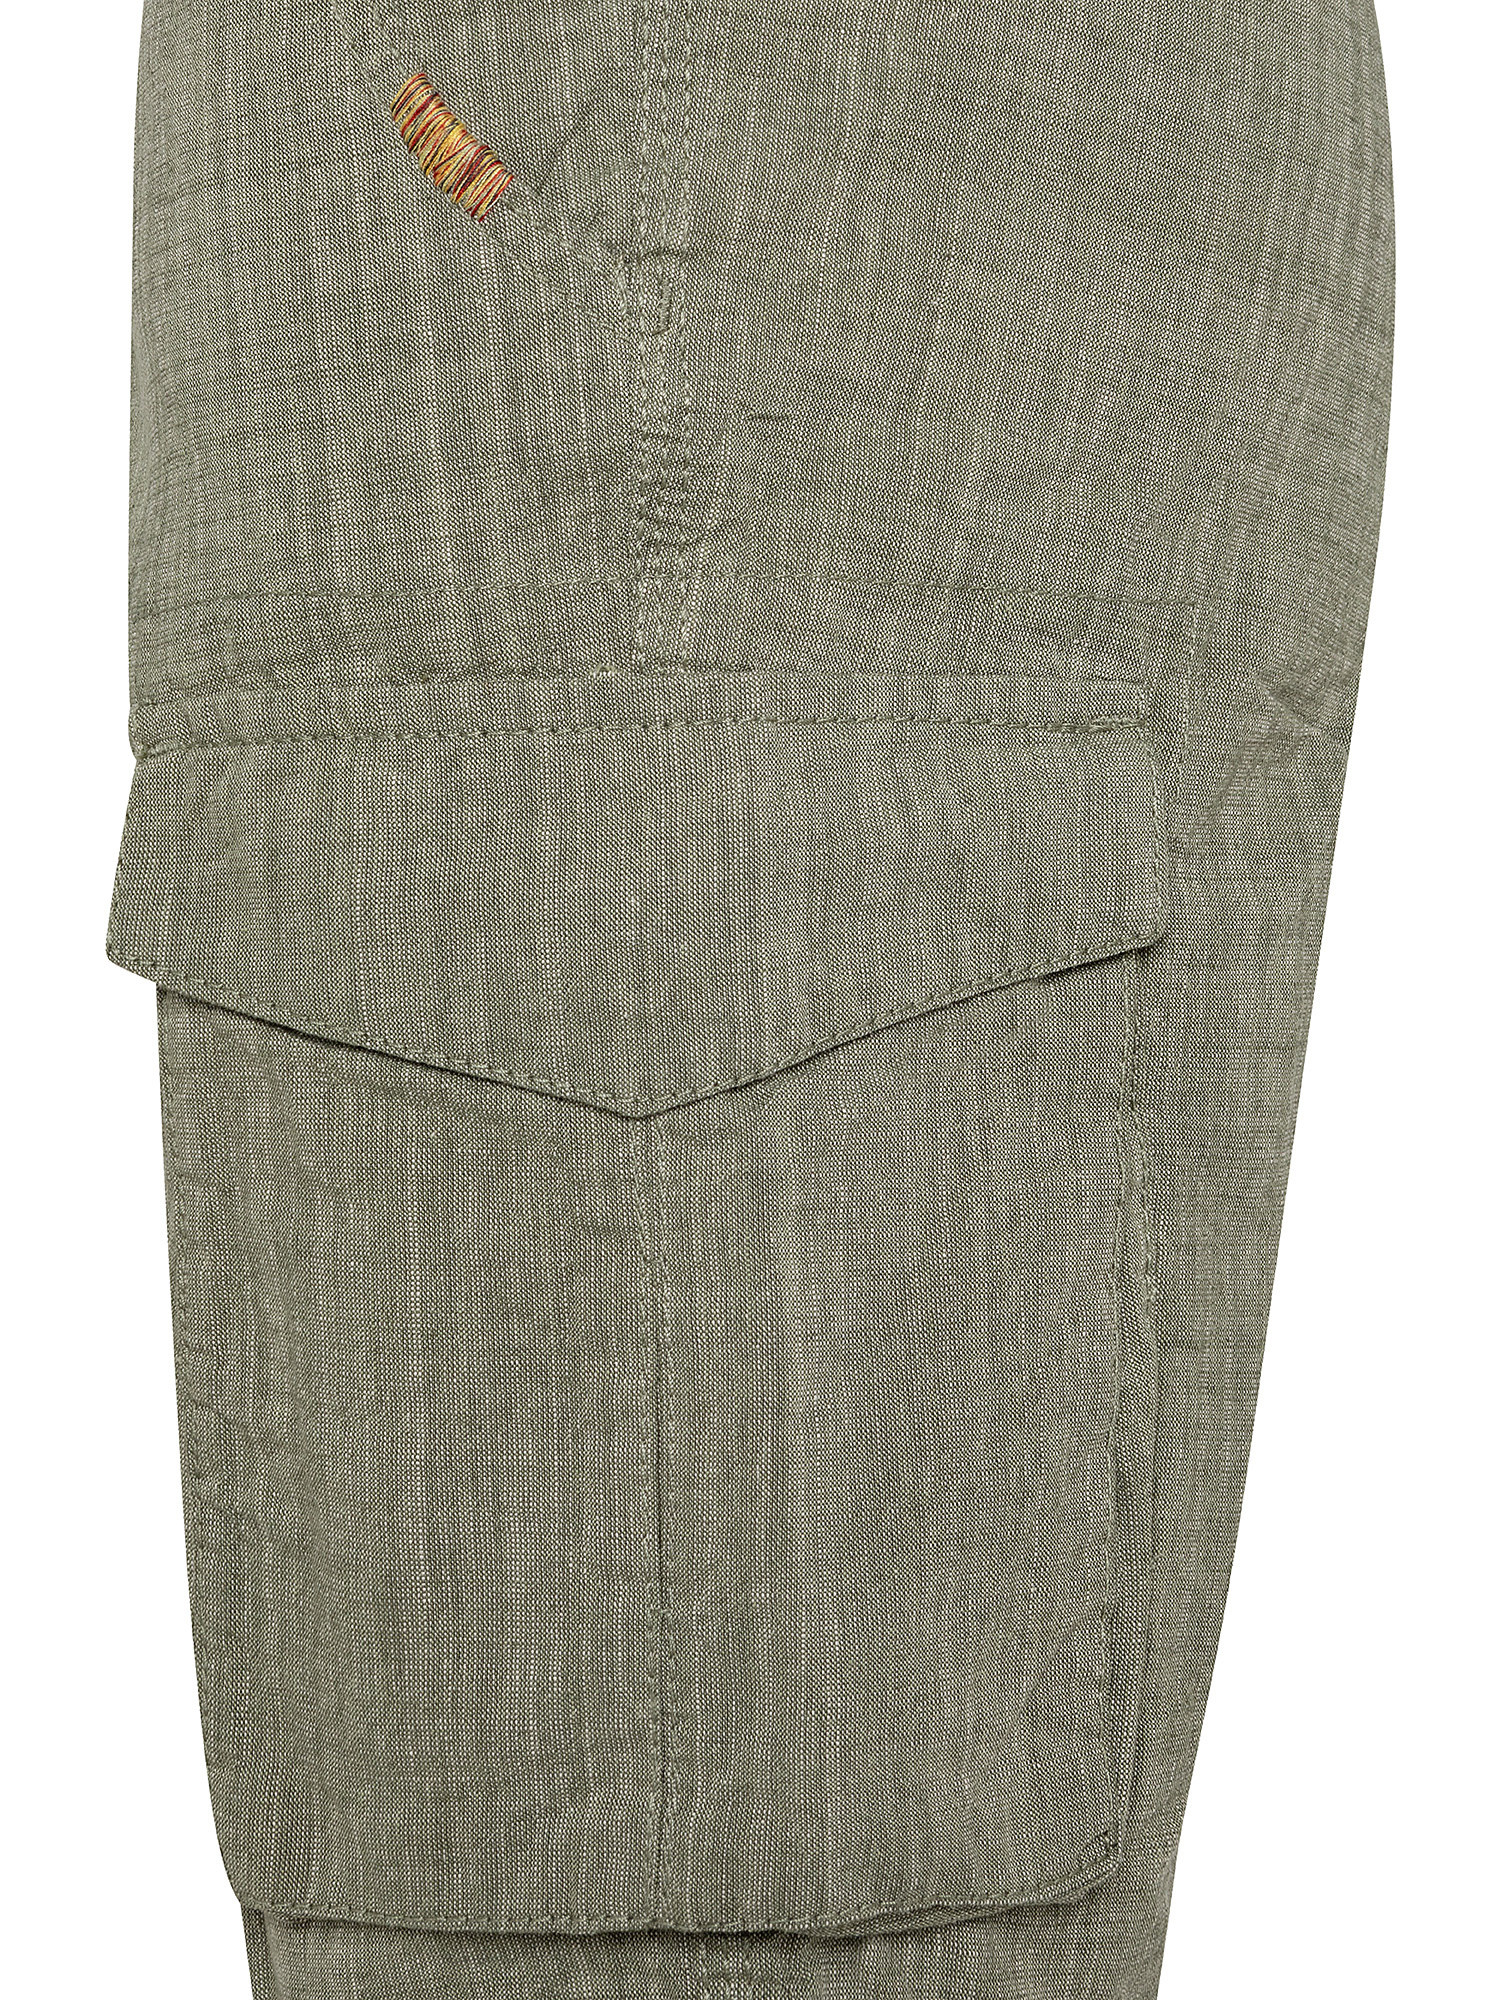 Cargo shorts, Green, large image number 2